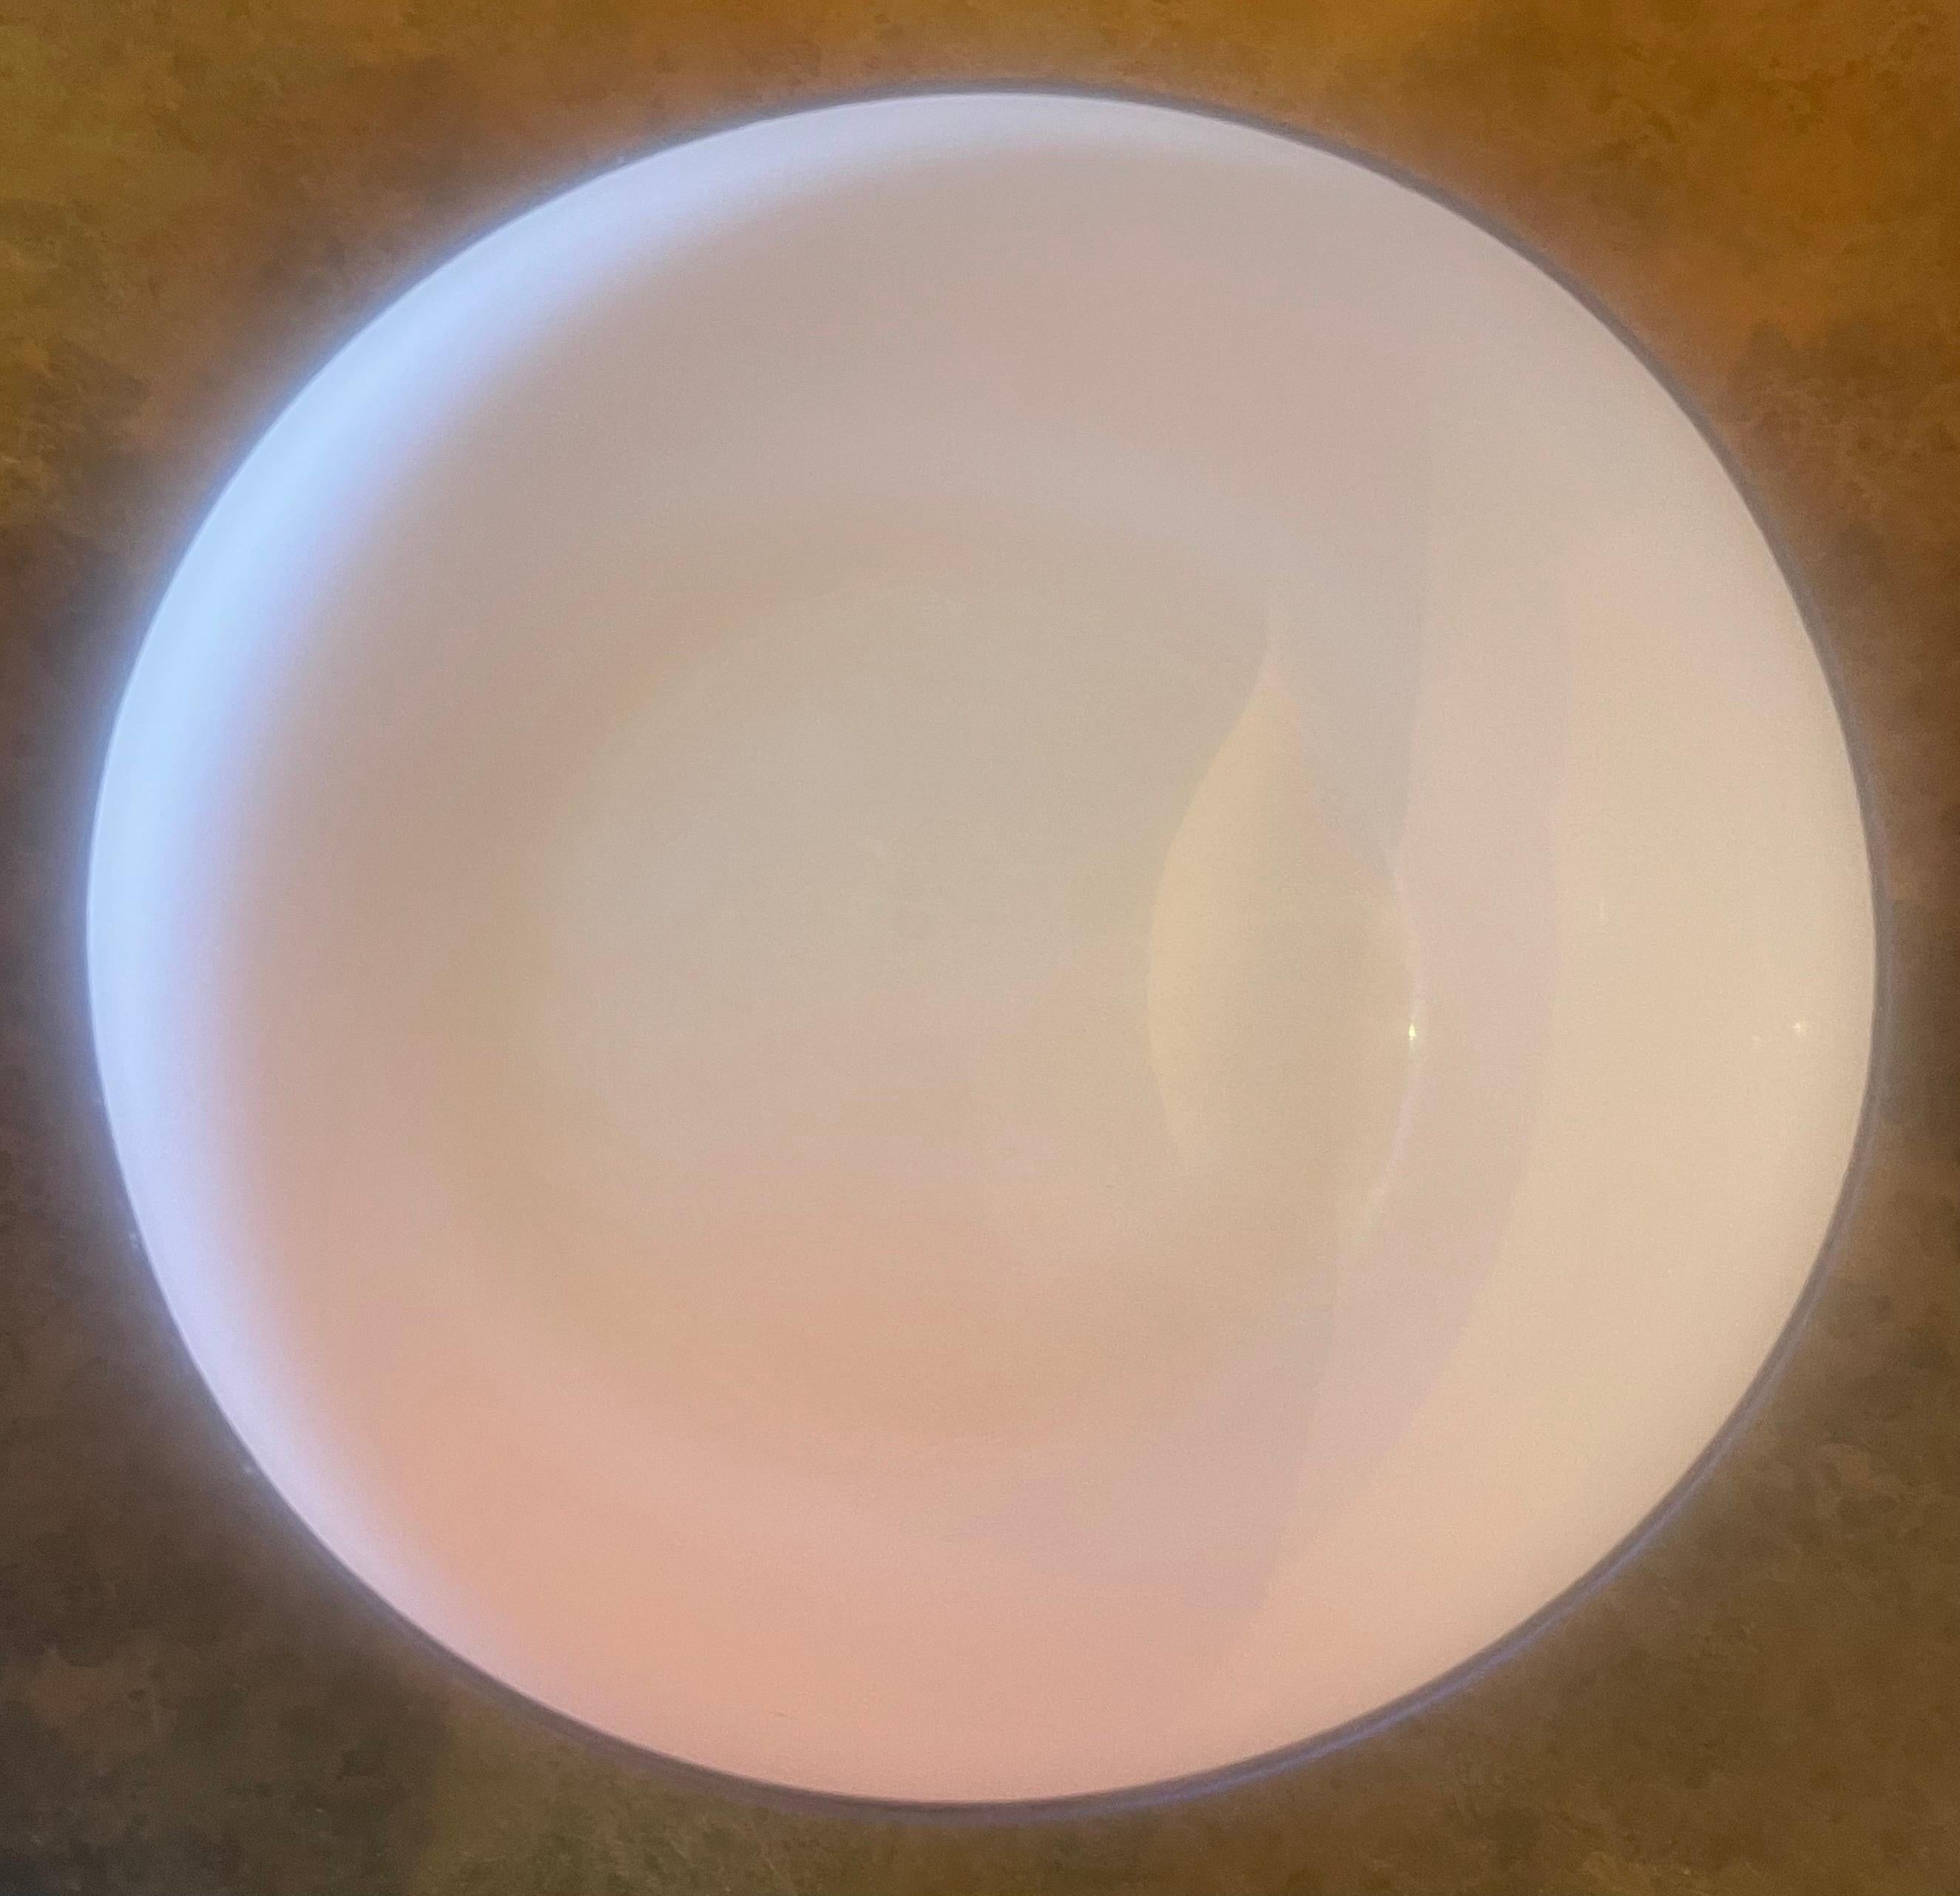 Pair of Danish Modern Blue & White Enamel Bowl by Jens Quistgaard for Dansk For Sale 4